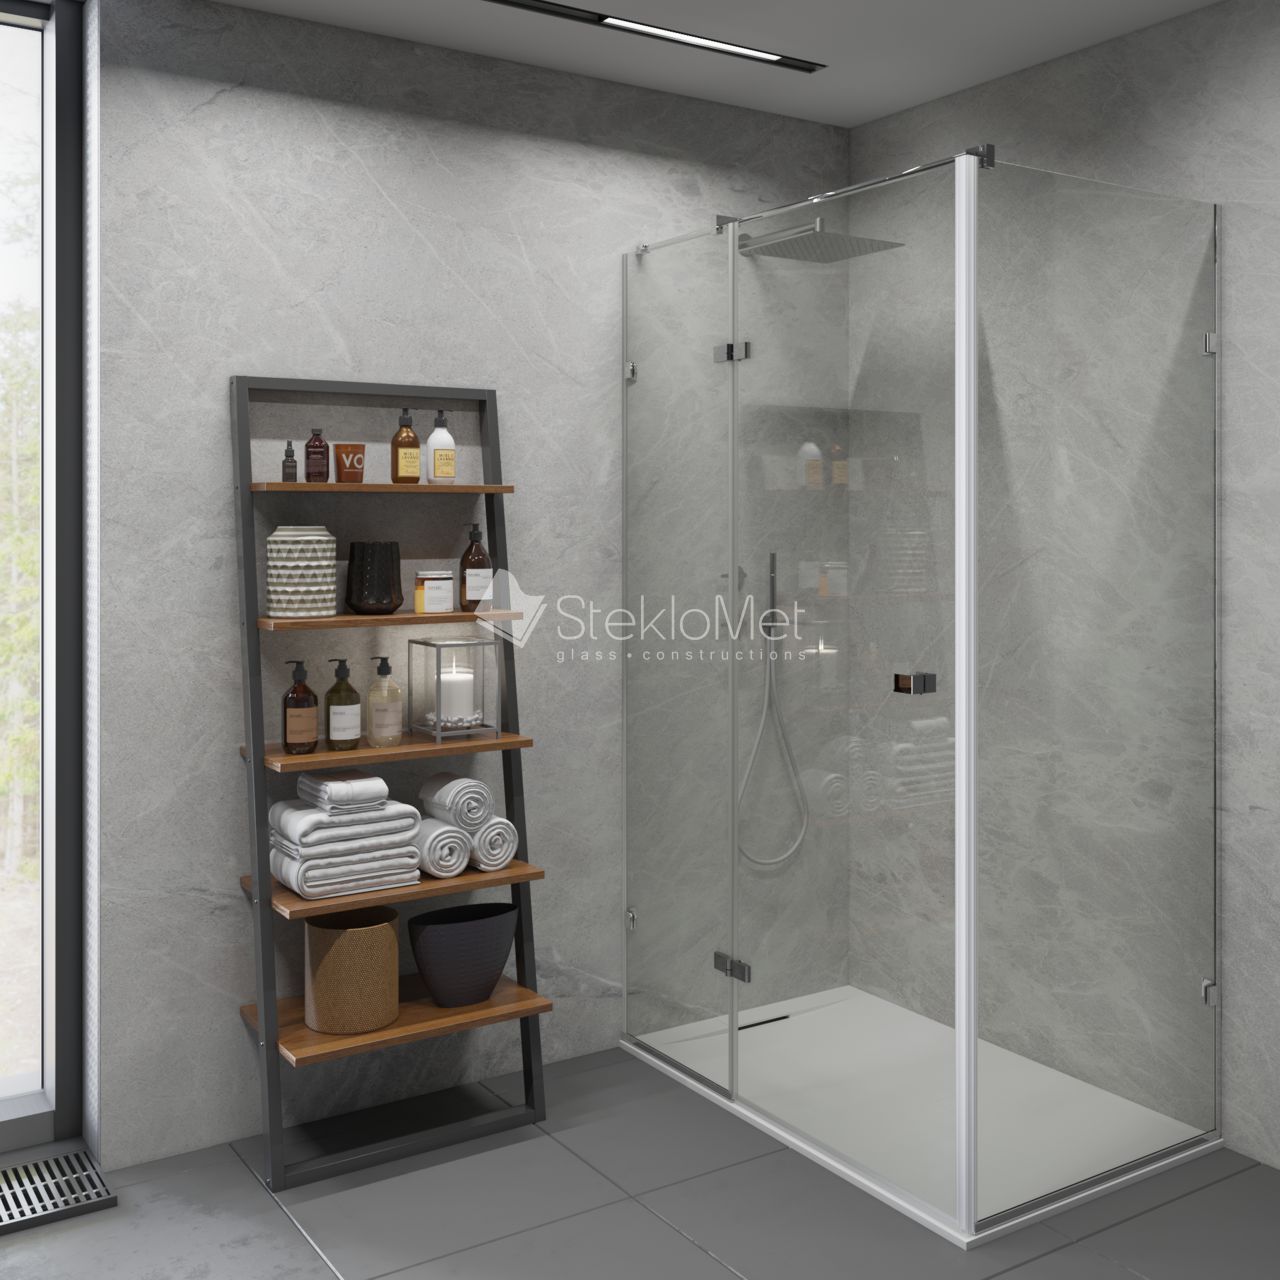   StekloMet  Shower Classic SM-090311.14